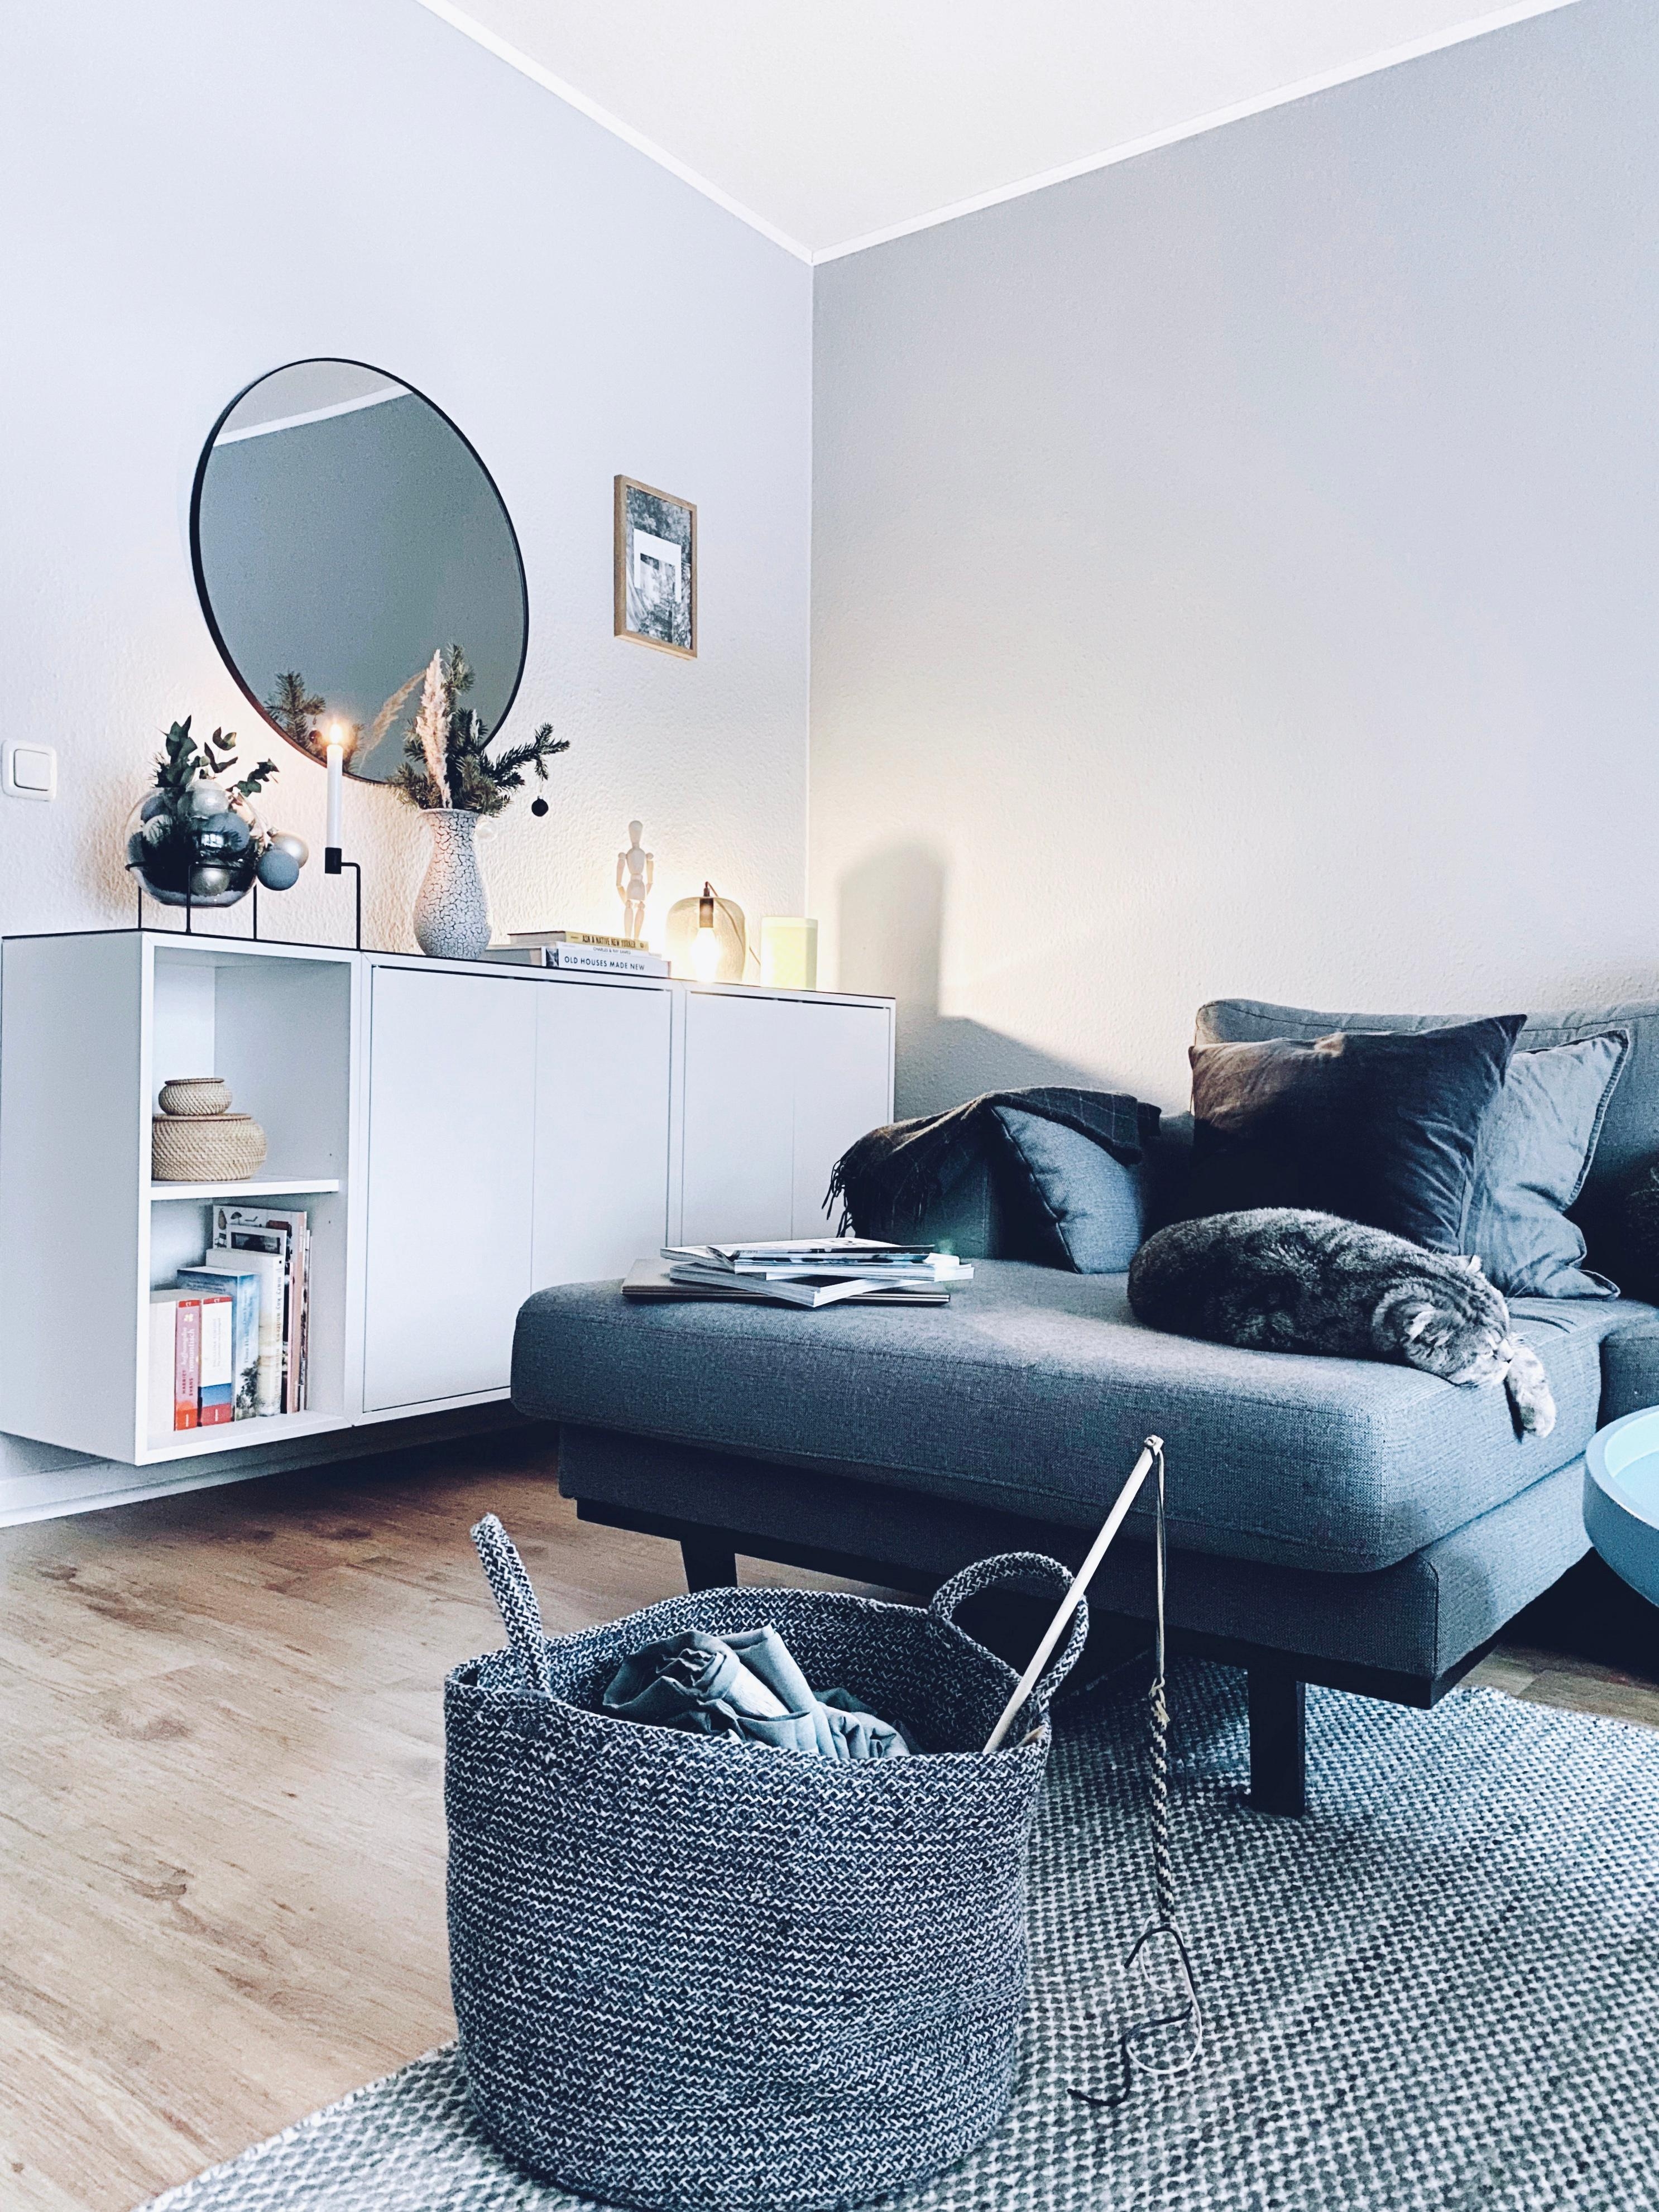 Greylover 🖤
#interior #scandinaviandesign #mynordicroom #mynordichome #livingroom #xmasiscoming #xmasdecorations #hygge